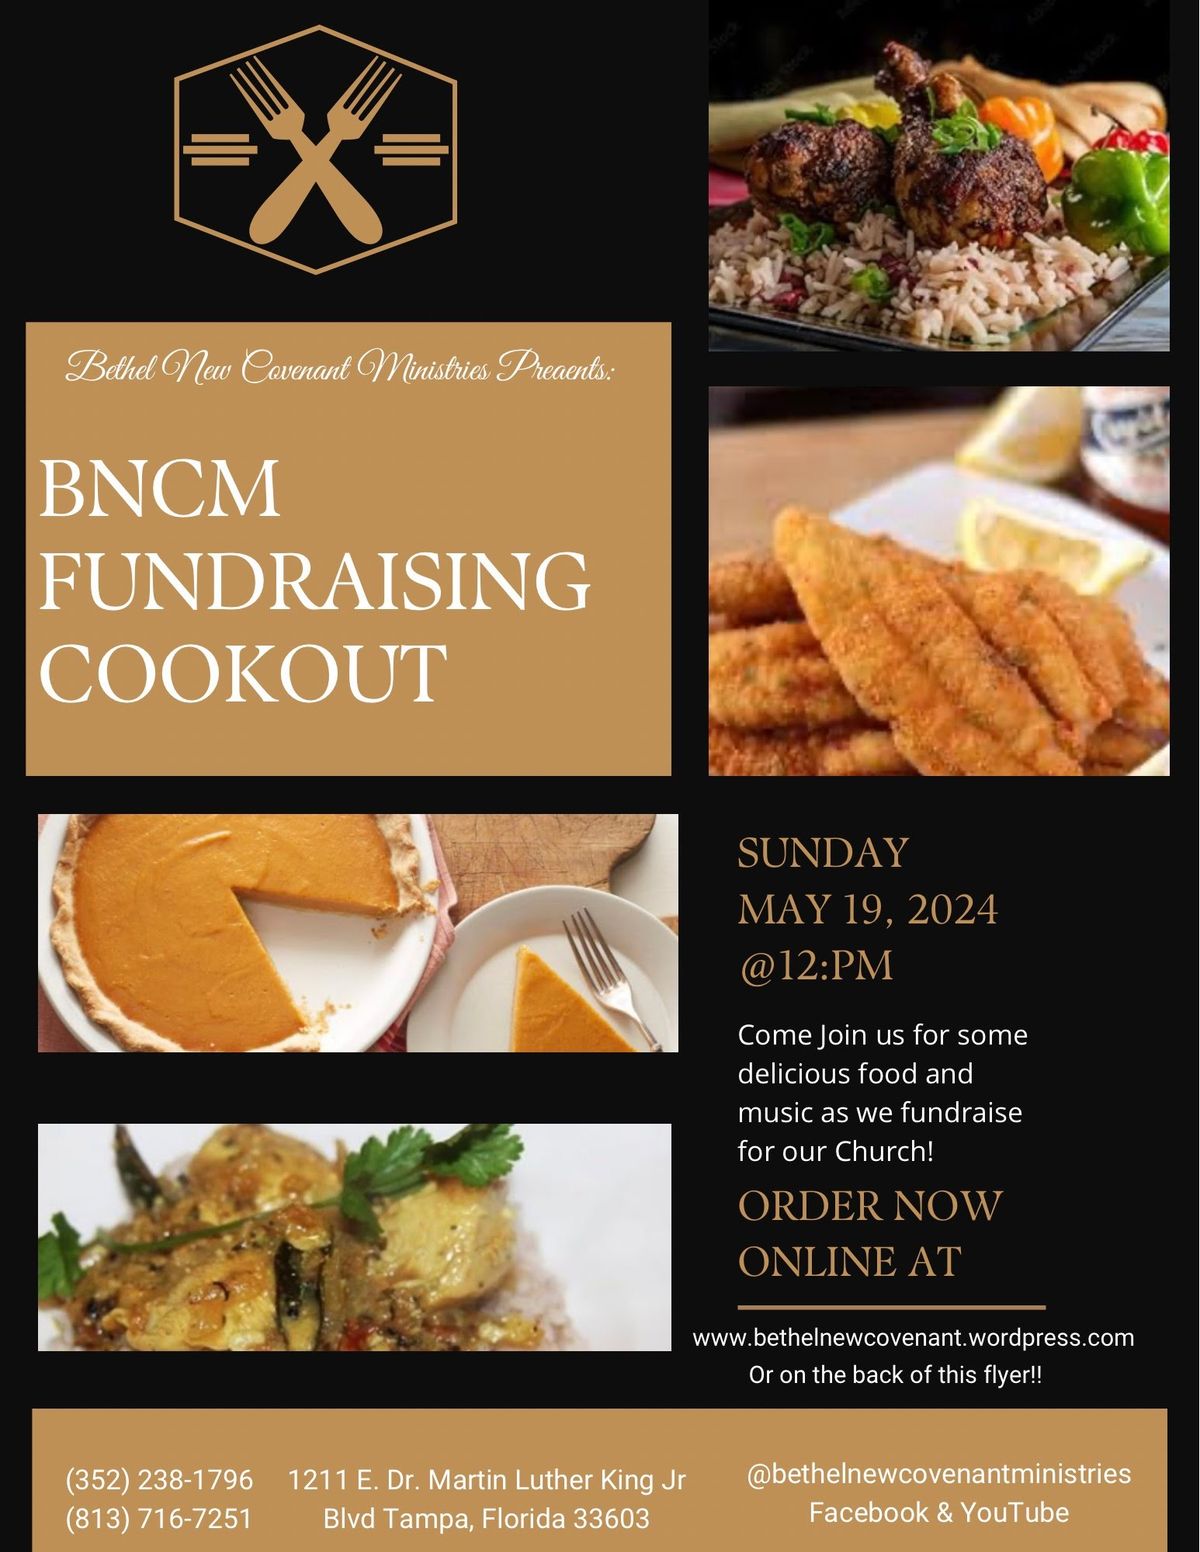 BNCM Fundraising Cookout